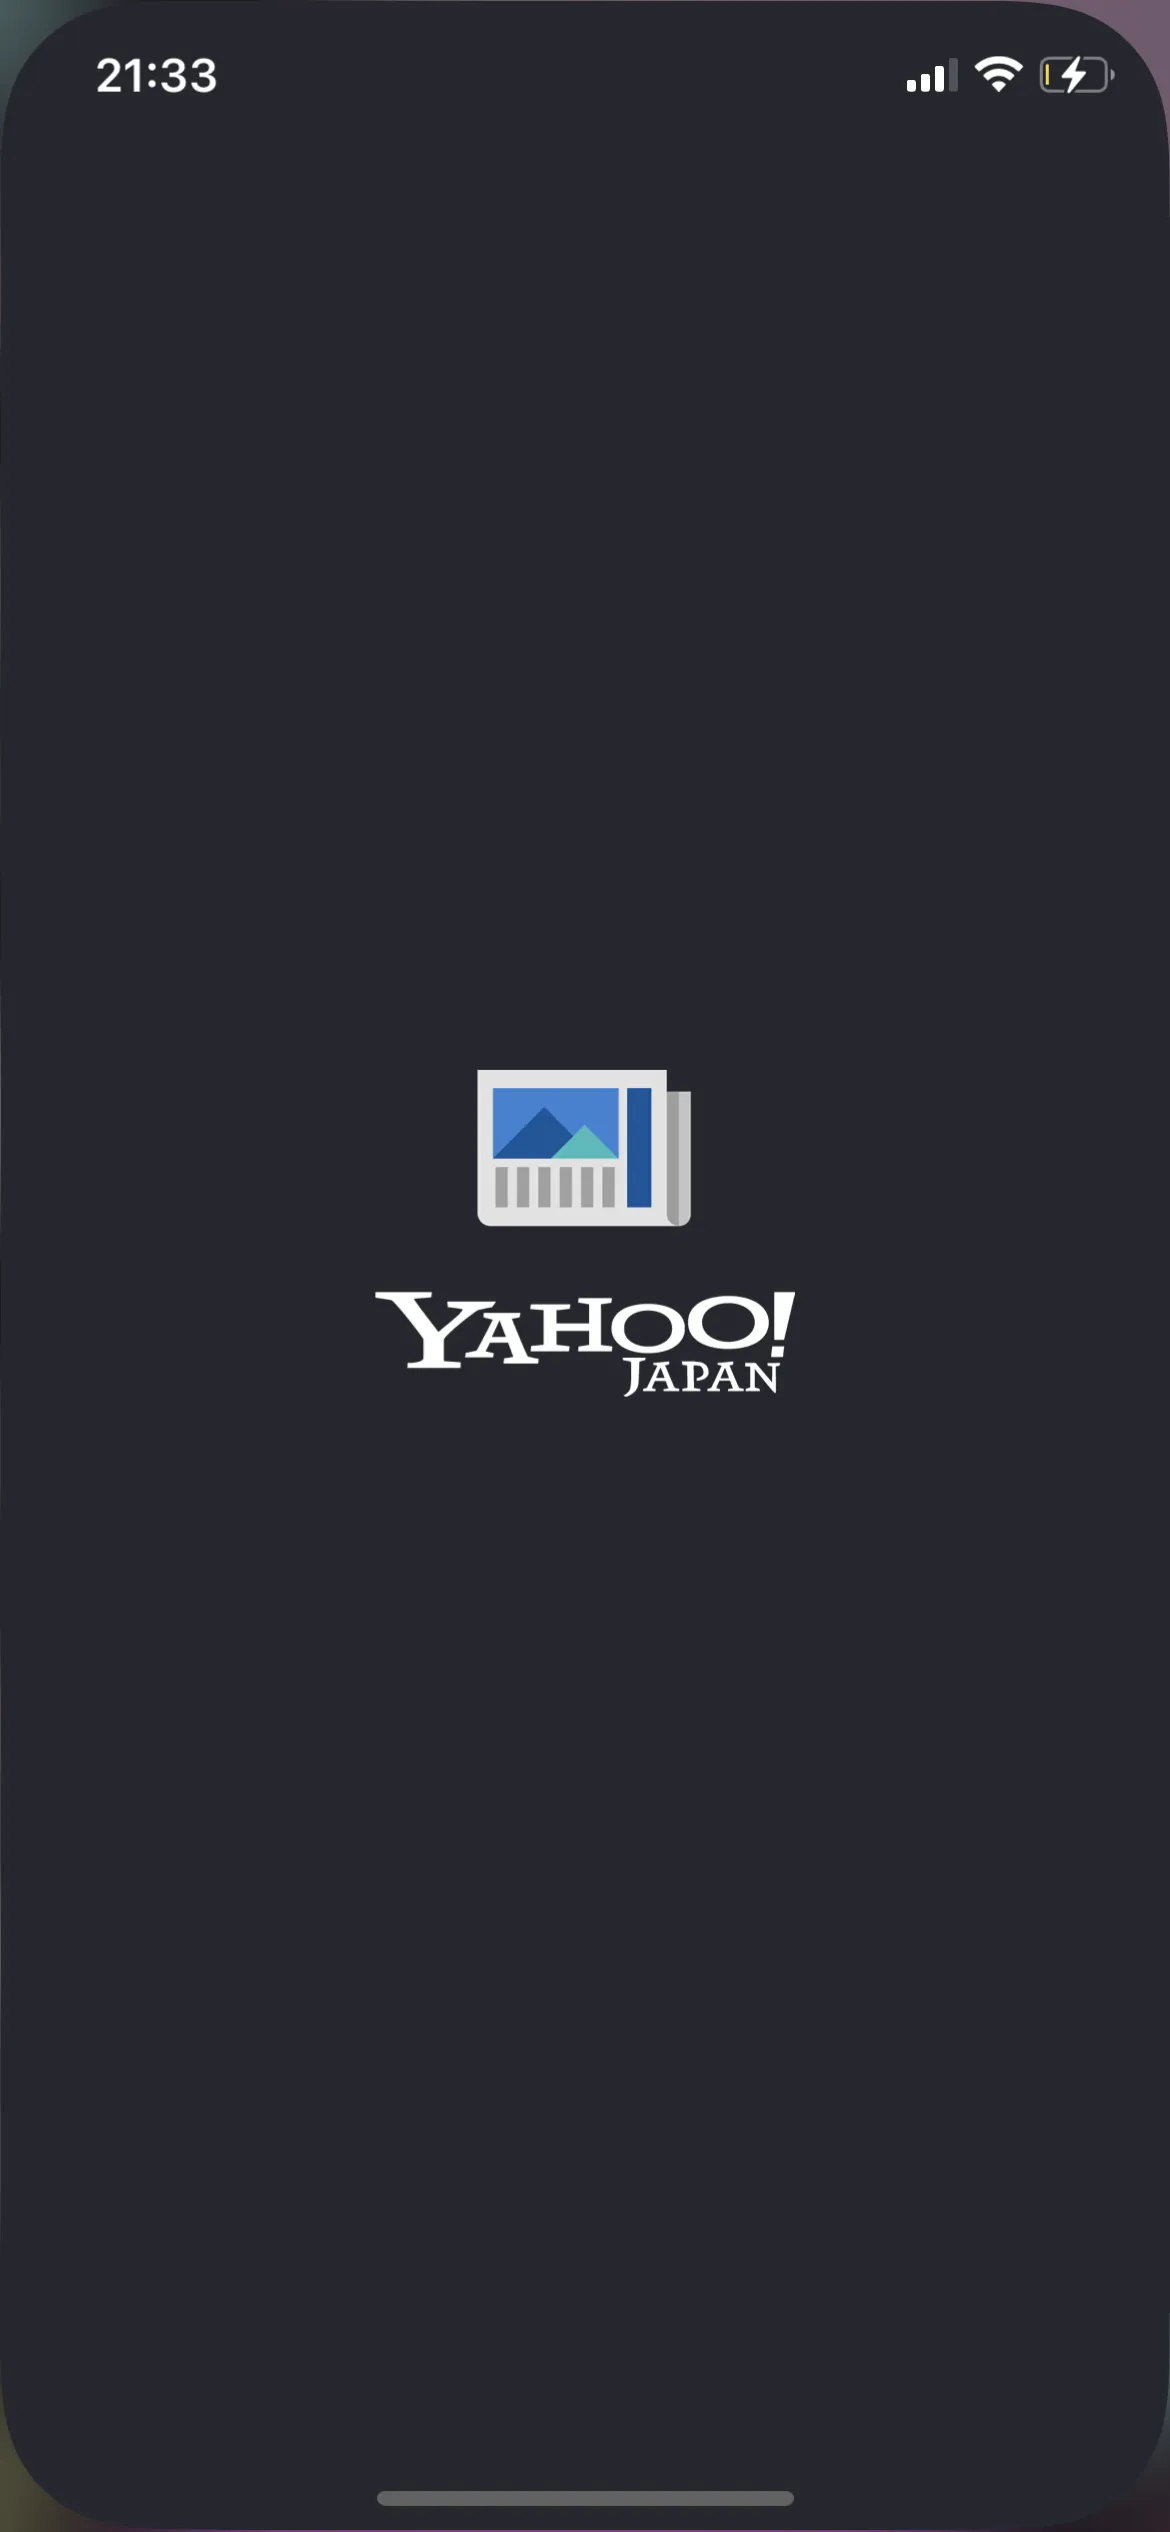 Yahoo!ニュース オンボーディング screen